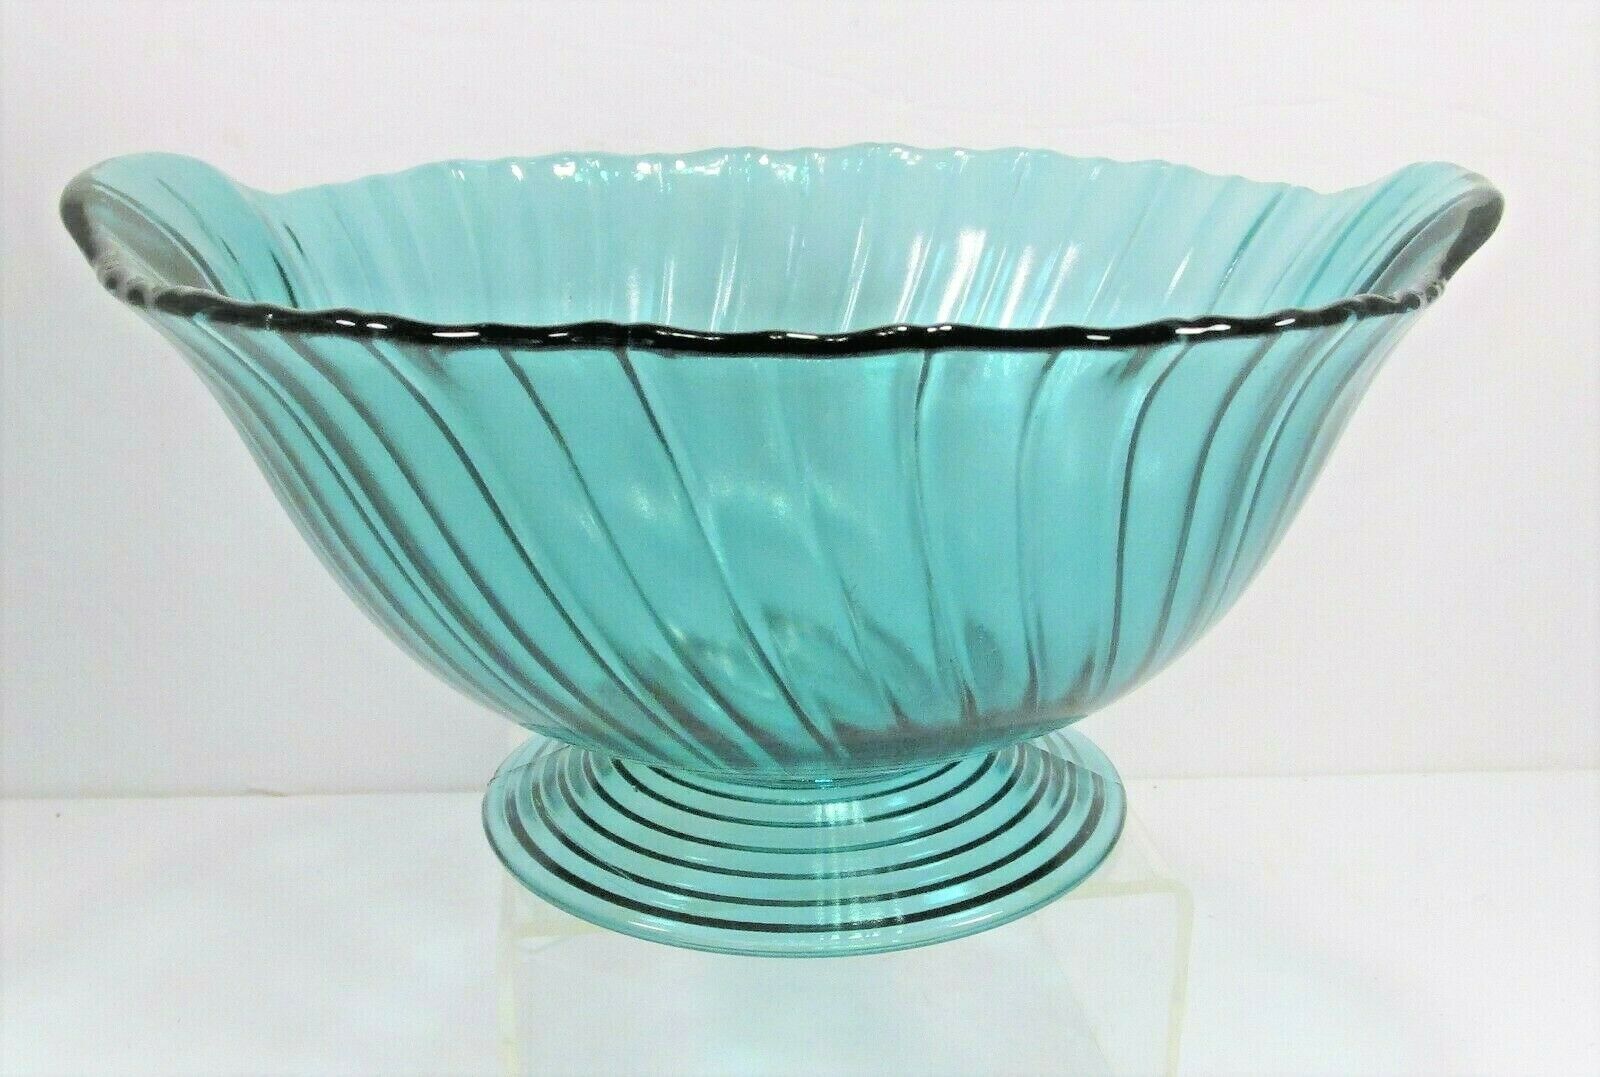 Jeanette Glass Ultramarine Swirl Teal Blue Footed Bowl 9" D 1.5 Qt 1937-1938